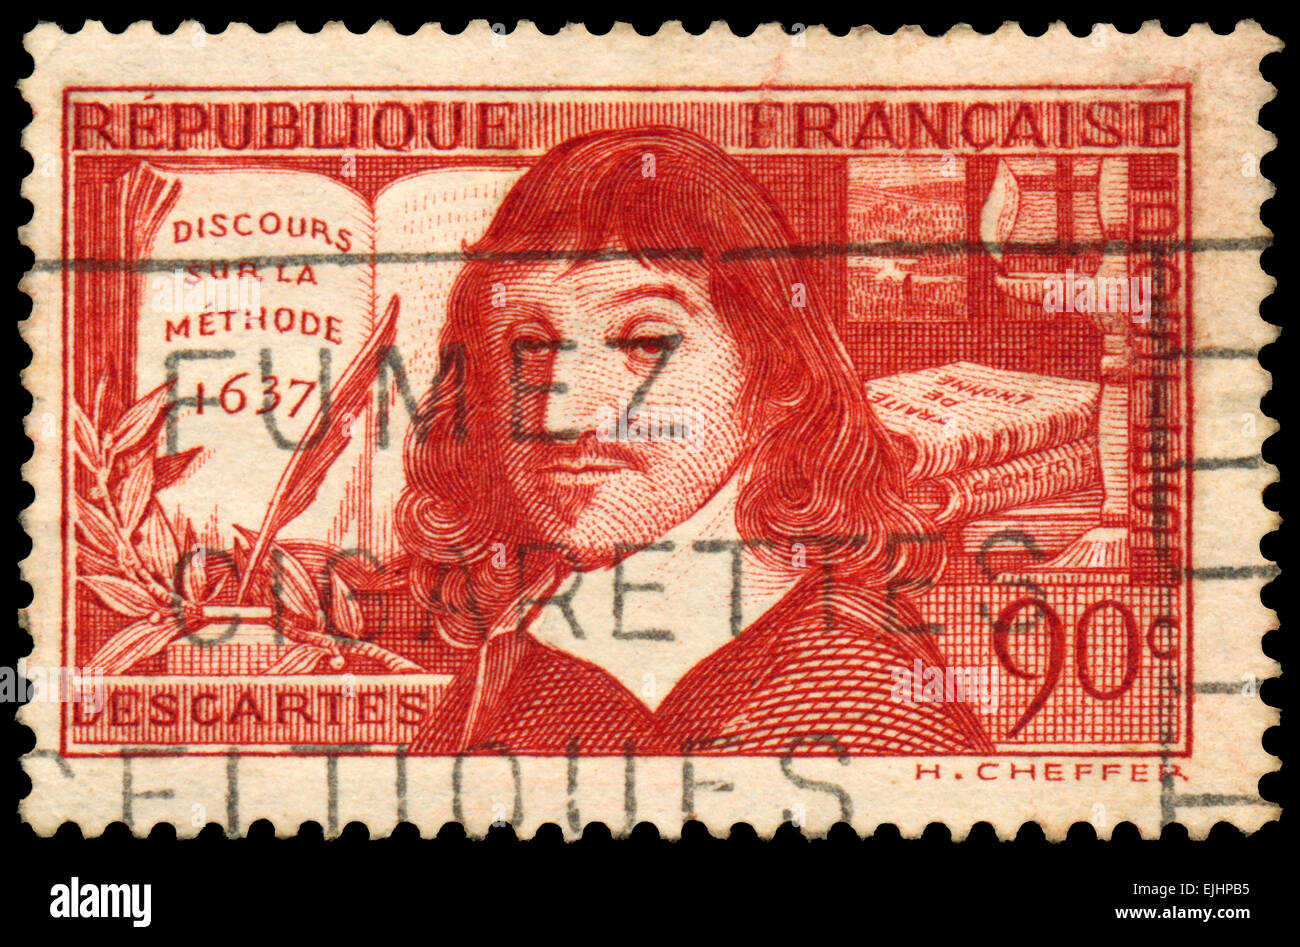 FRANCE - CIRCA 1937: Stamp printed in France shows an image of Rene Descartes, circa 1937. Stock Photo